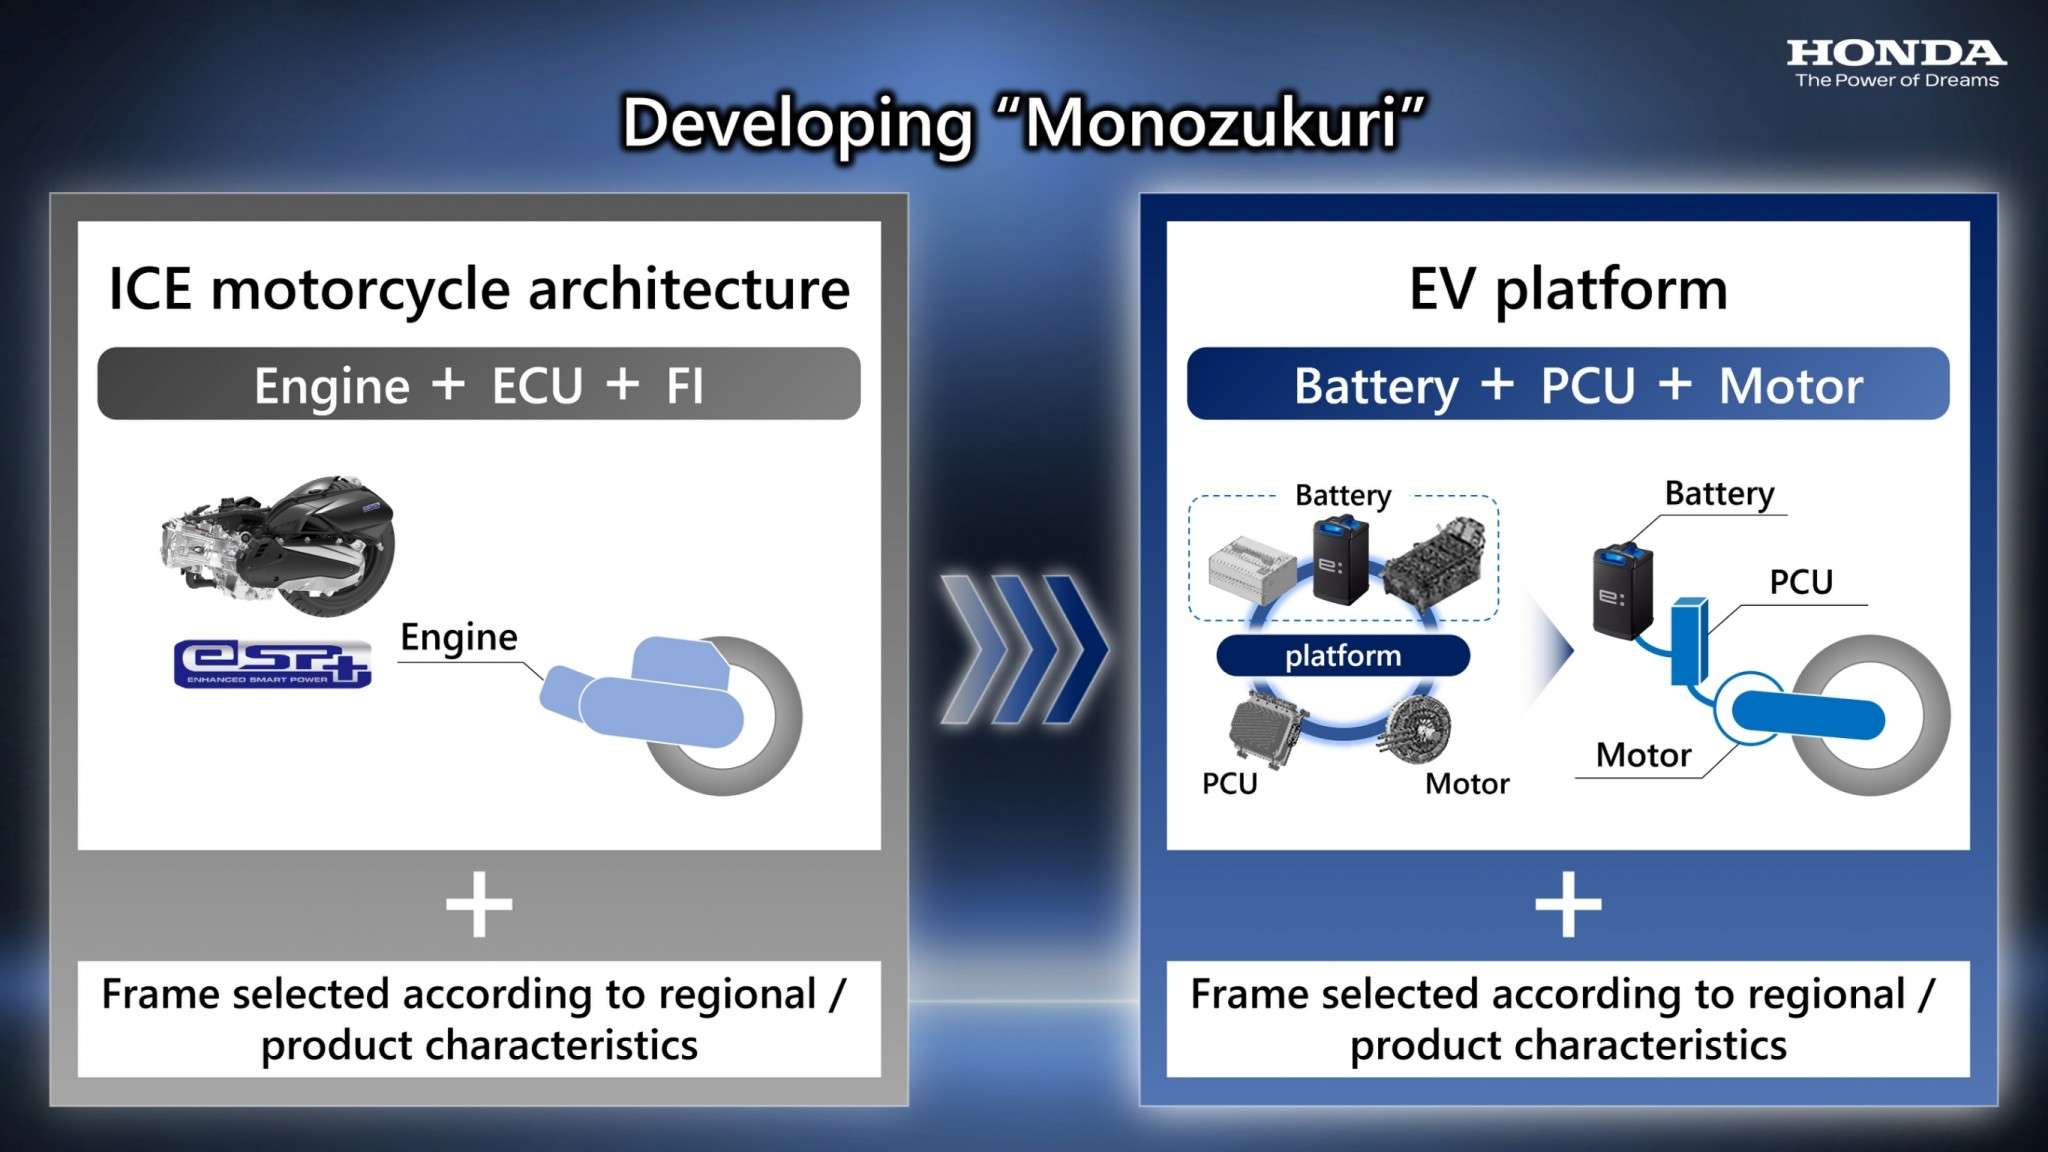 6 Developing Monozukuri_attached to press release ฮอนด้ามอเตอร์ประกาศพัฒนารถจักรยานยนต์ไฟฟ้าสู่ความเป็นกลางทางคาร์บอน วางเป้าเปิดตัวรถรุ่นใหม่ไม่น้อยกว่า 10 รุ่น ภายในปี 2025 - 6 Developing Monozukuri attached to press release